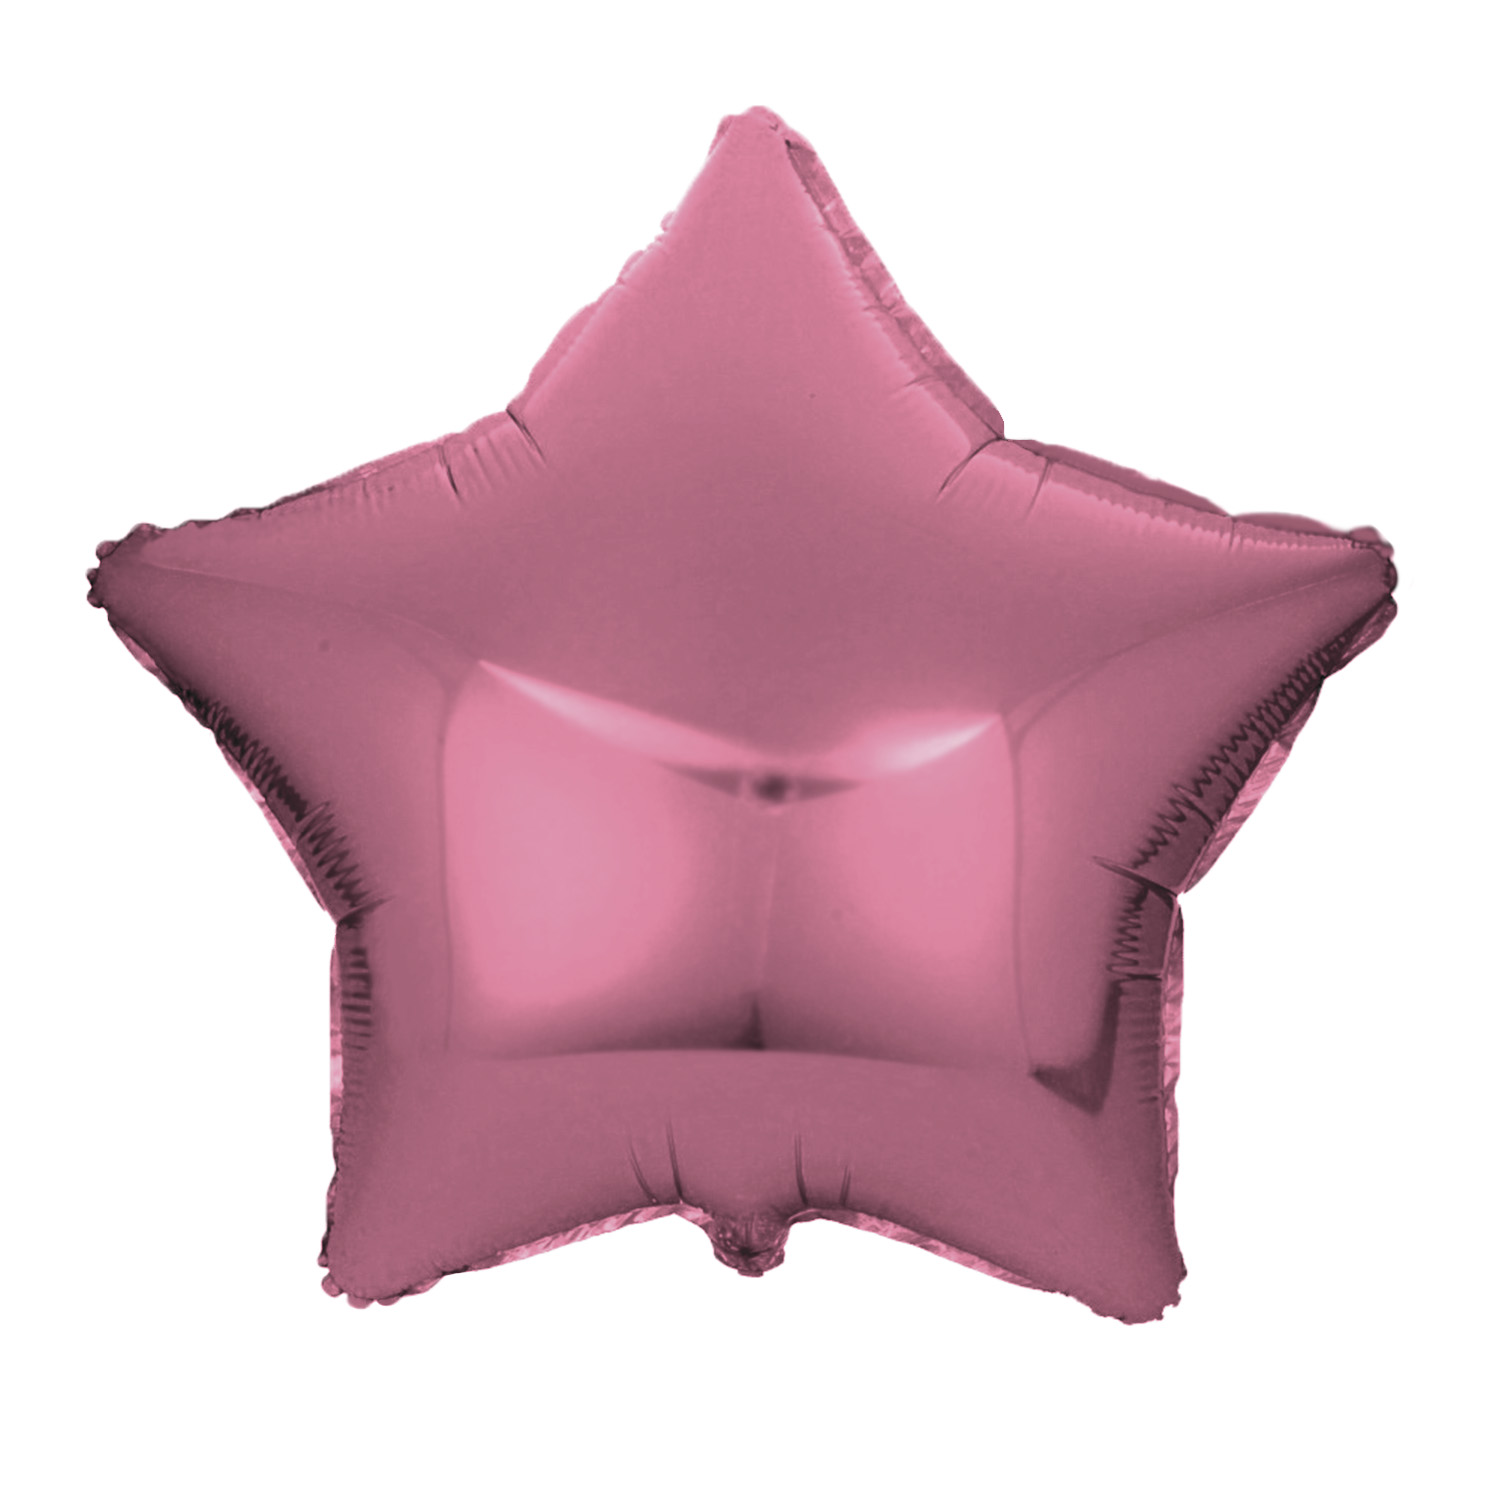 Folienballon Stern, rosa, ca. 45 cm